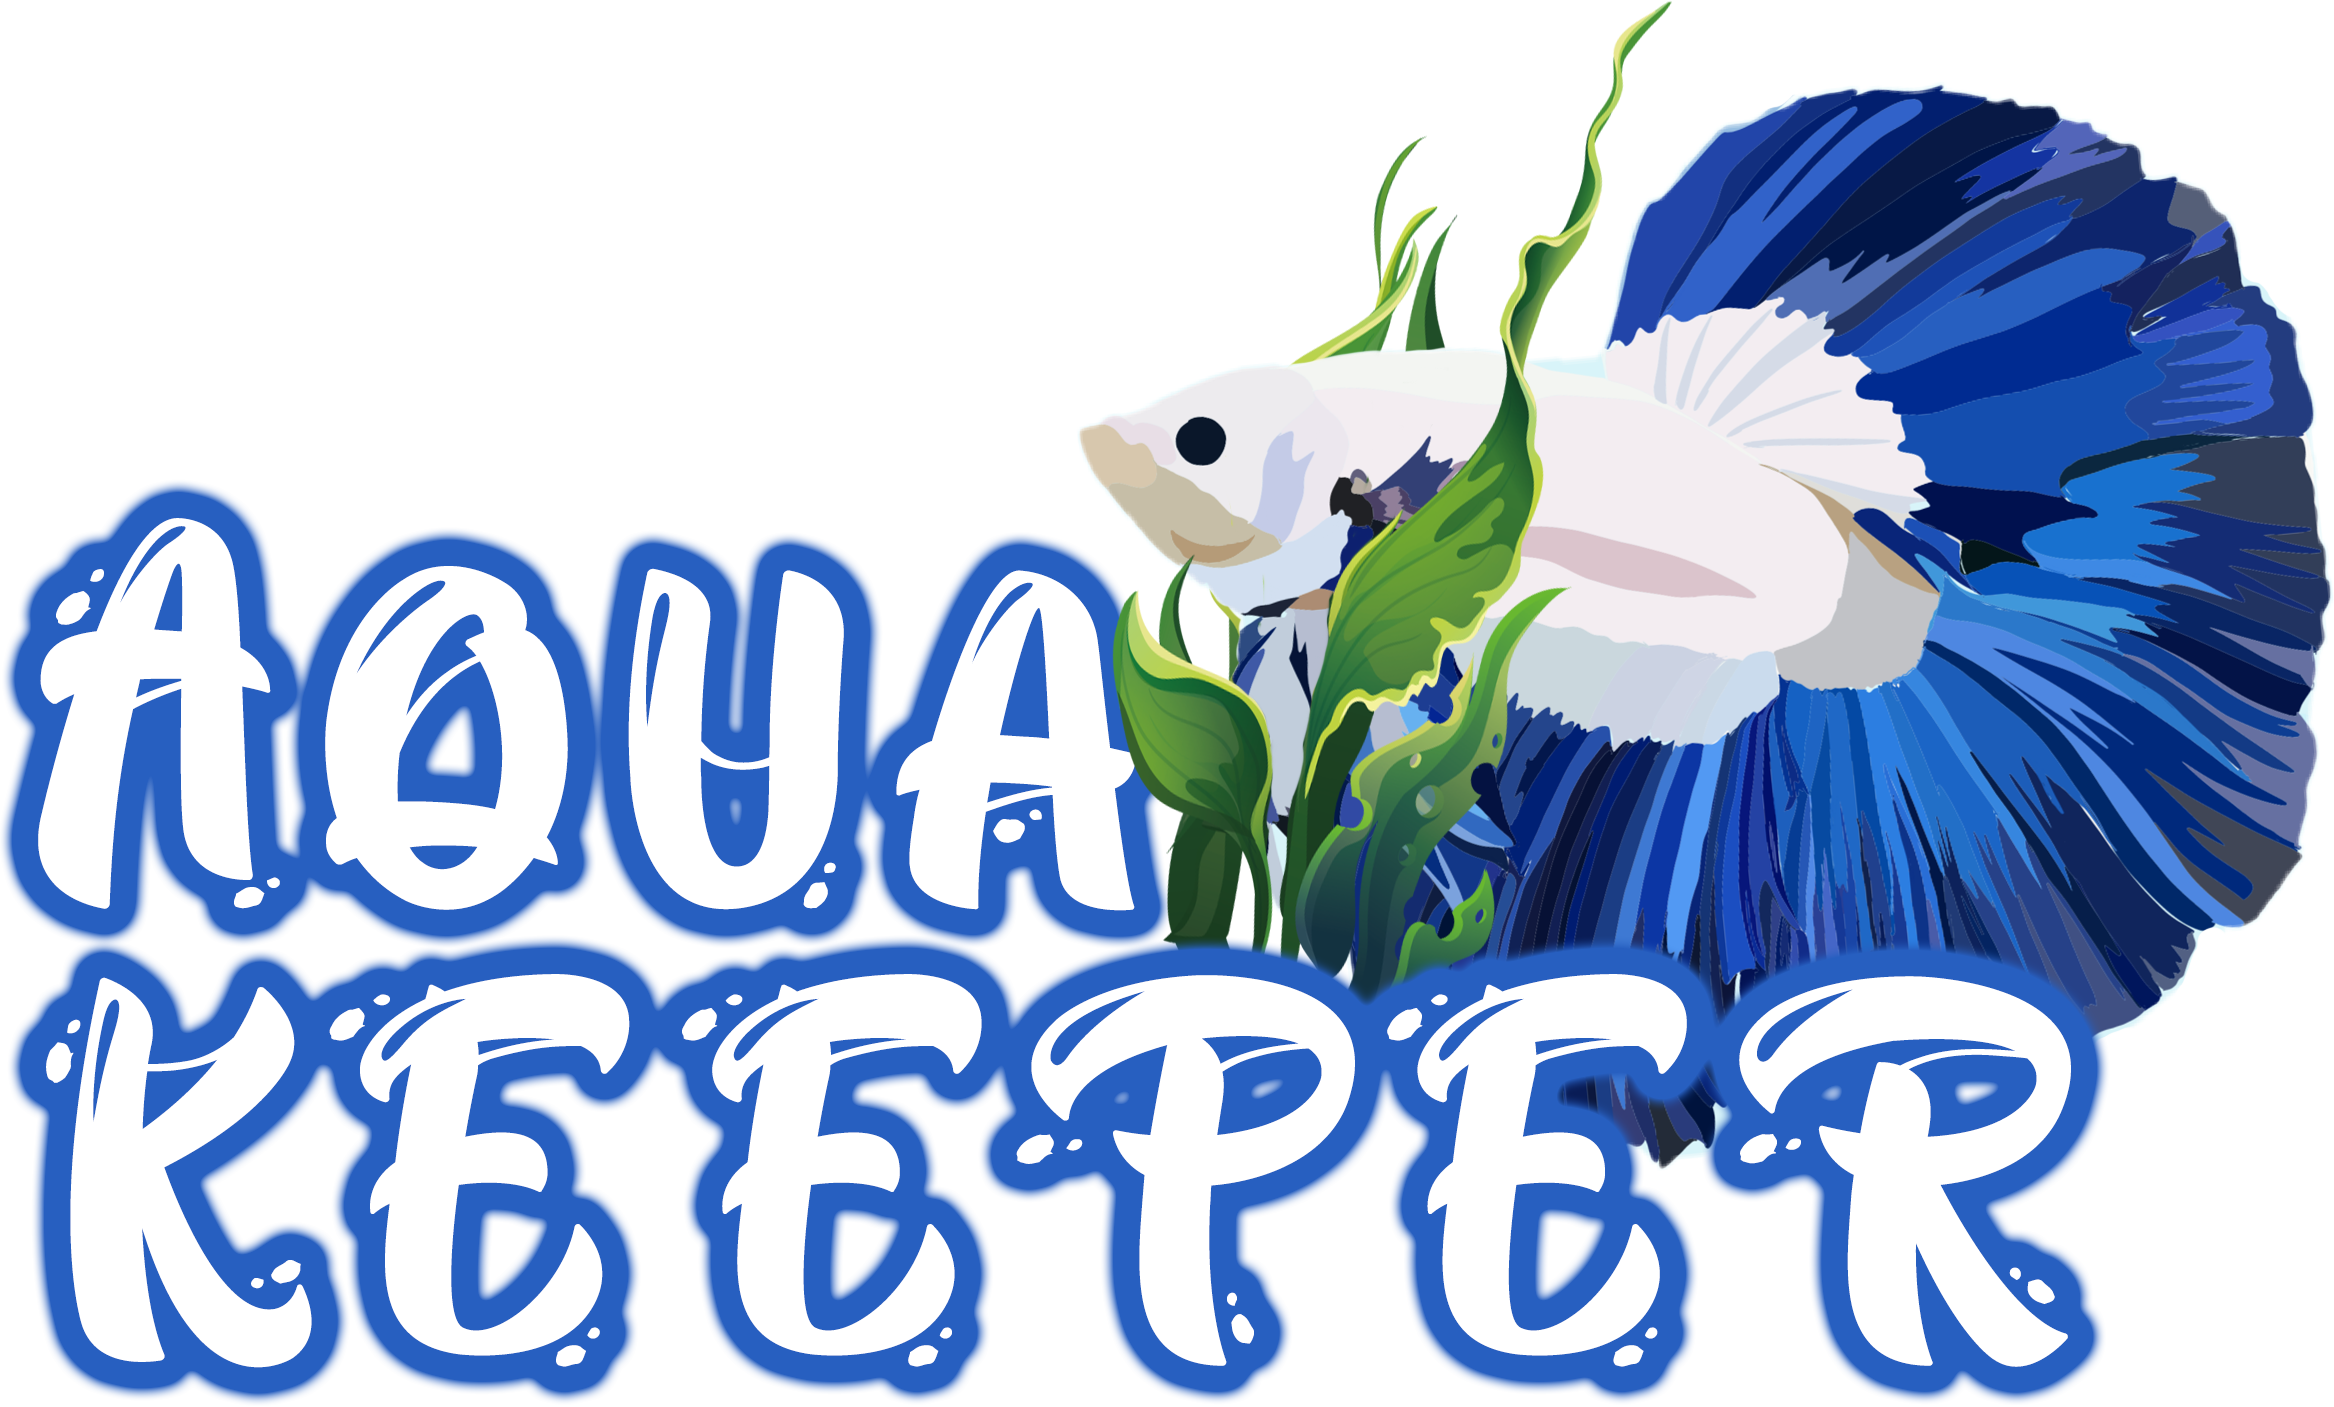 Aqua Keeper - The Fish Keeping Paradise, Shopify Store Listing